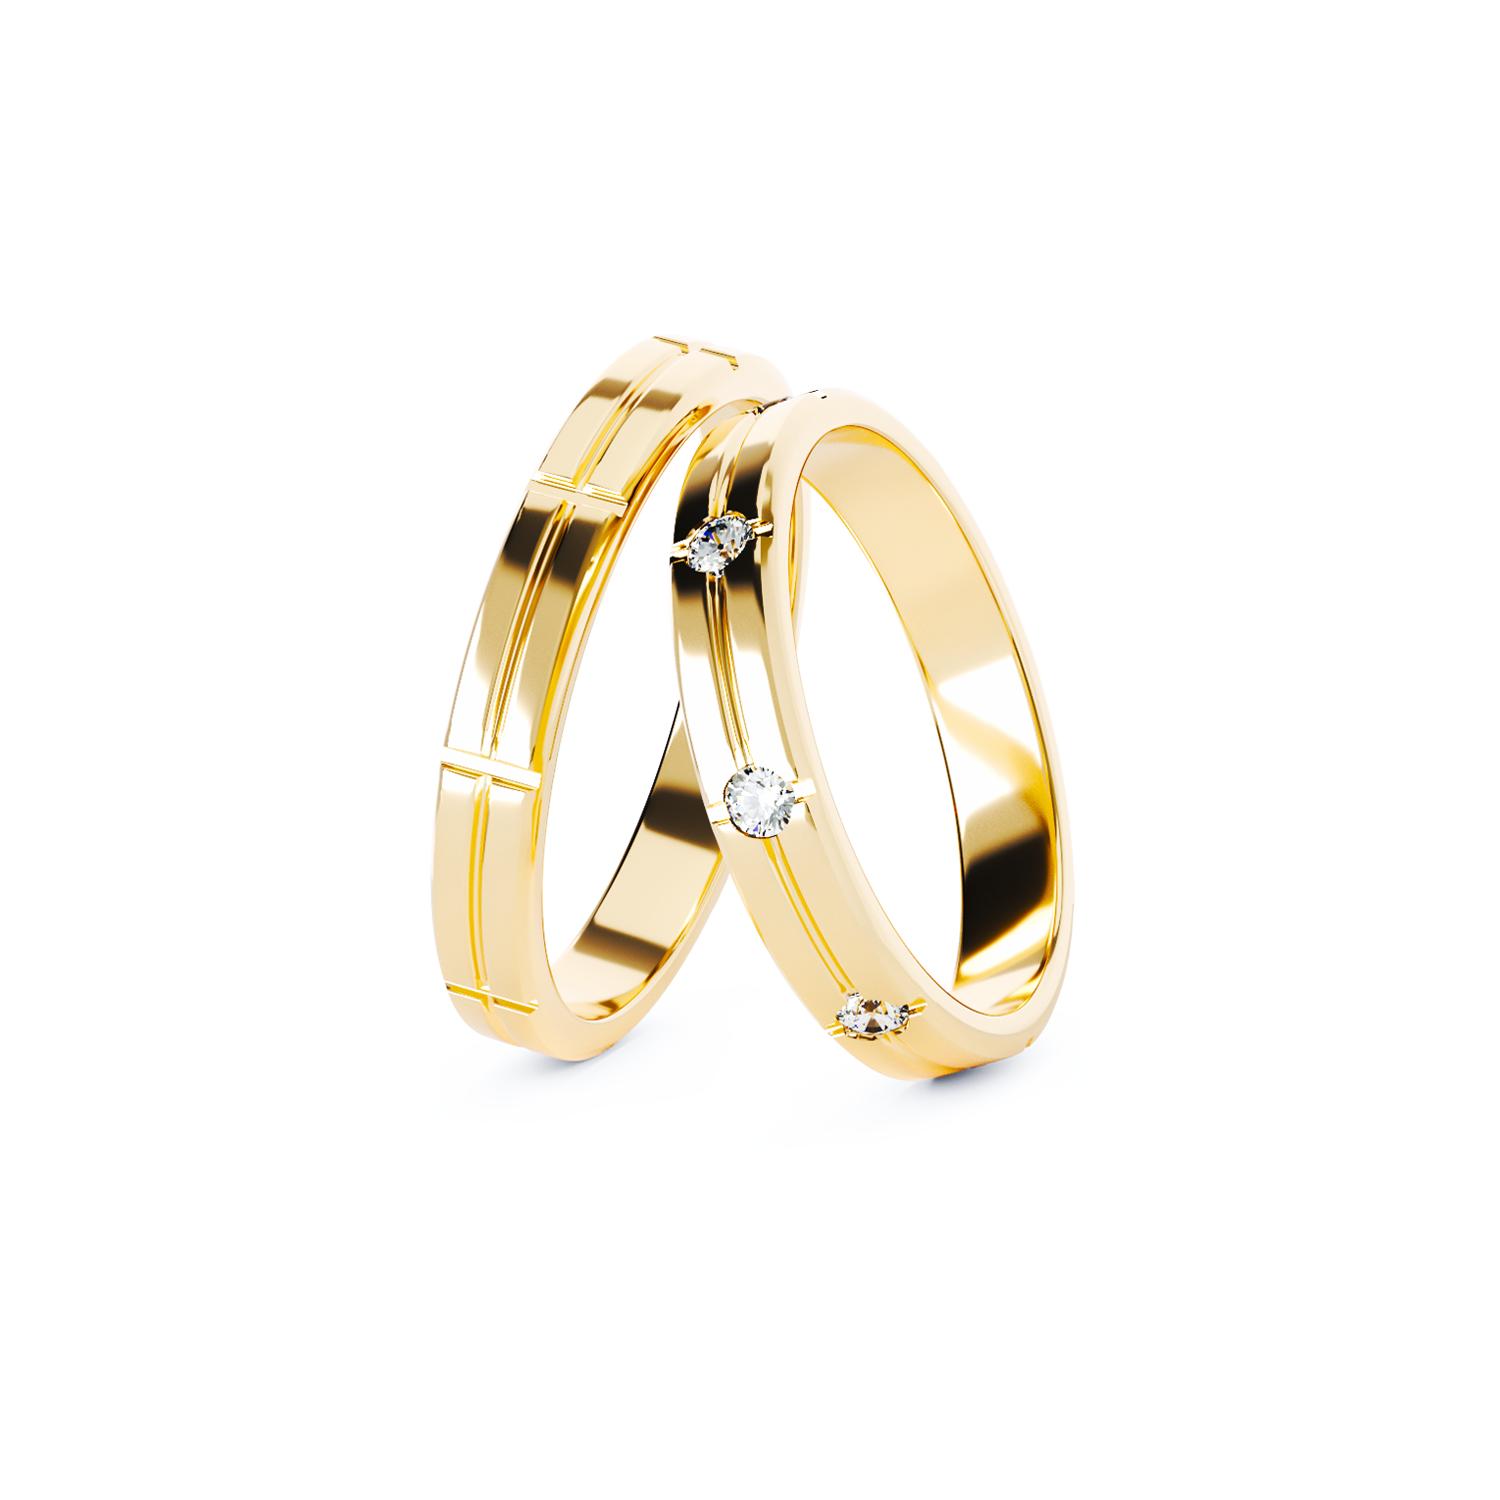 TEI-C681 gold wedding rings